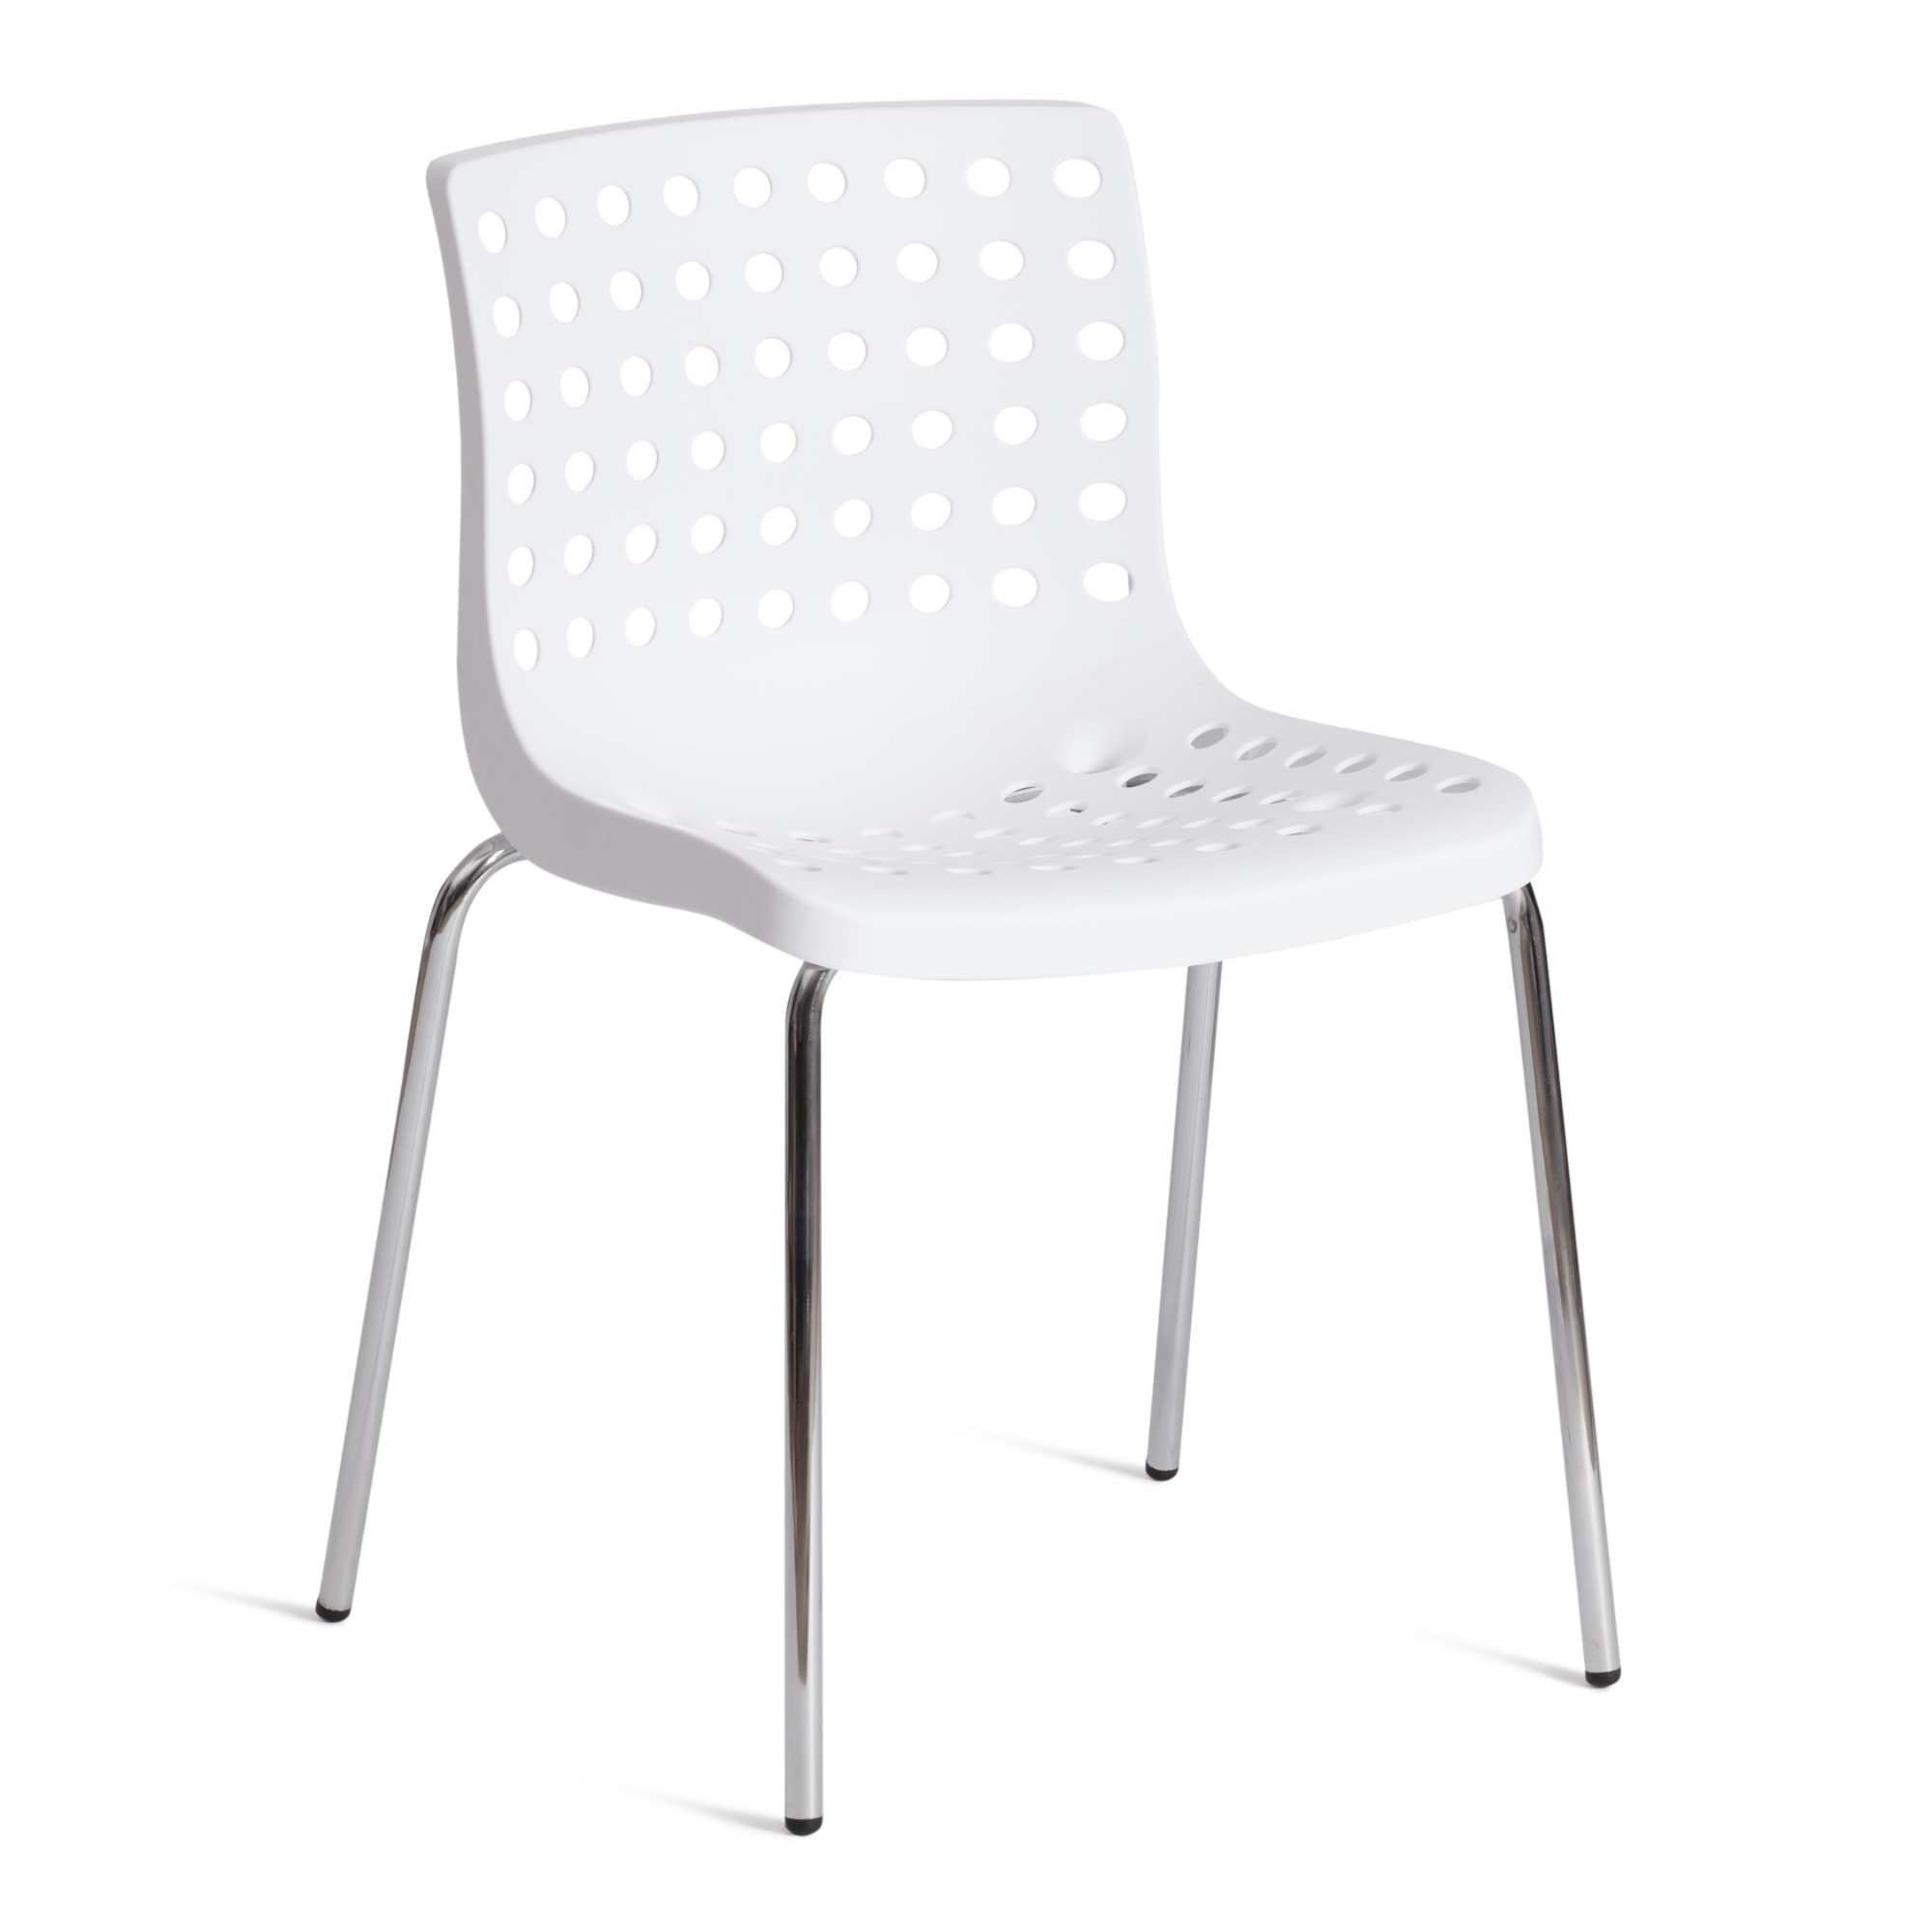 Стул ТС Skalberg пластиковый белый с хромированными ножками 46х56х79 см стул тс cindy chair пластиковый с ножками из бука бежевый 45х51х82 см